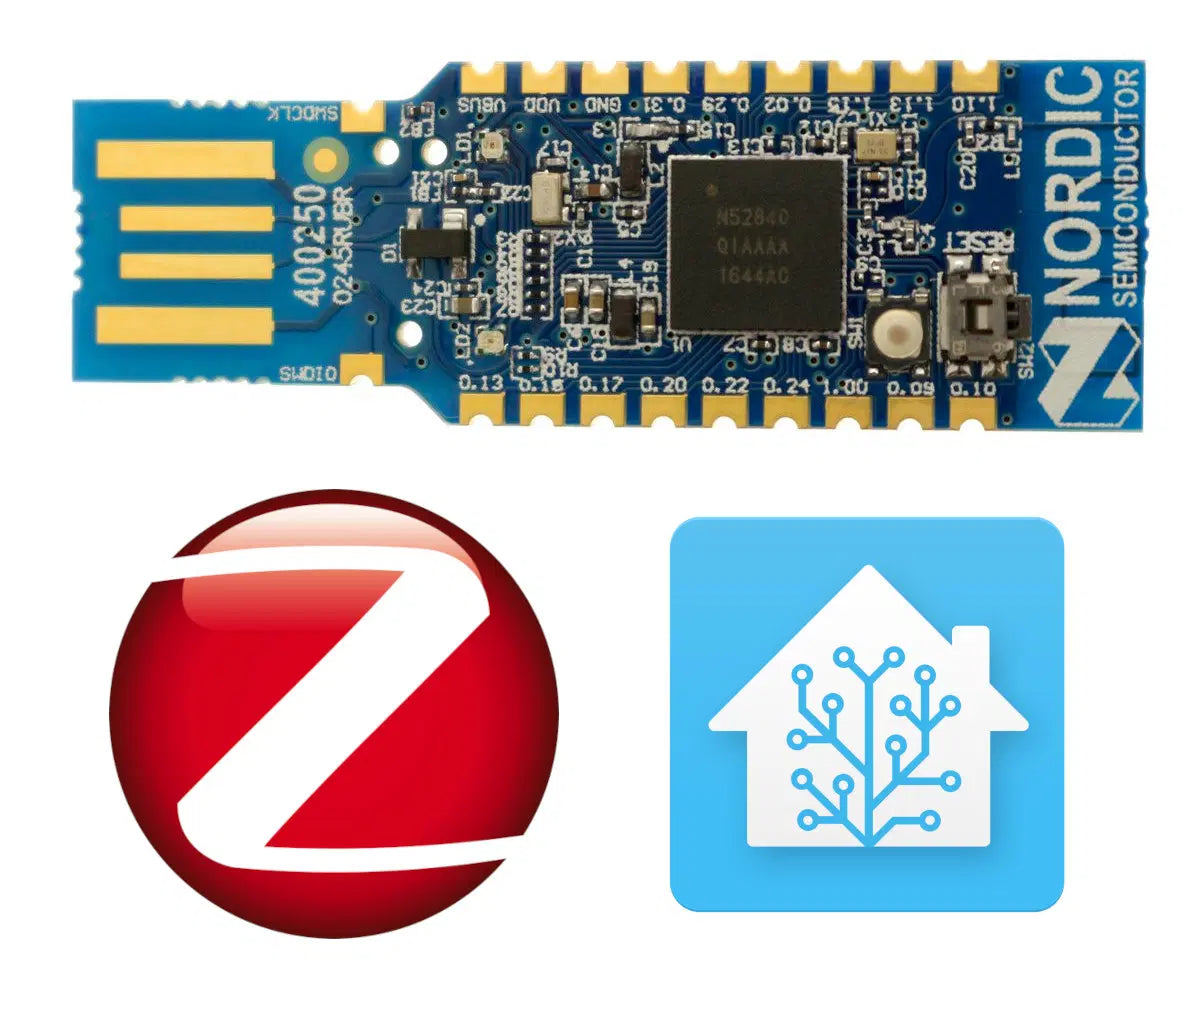 Introducing Zigbee Home: Open-Source Firmware for Zigbee Devices